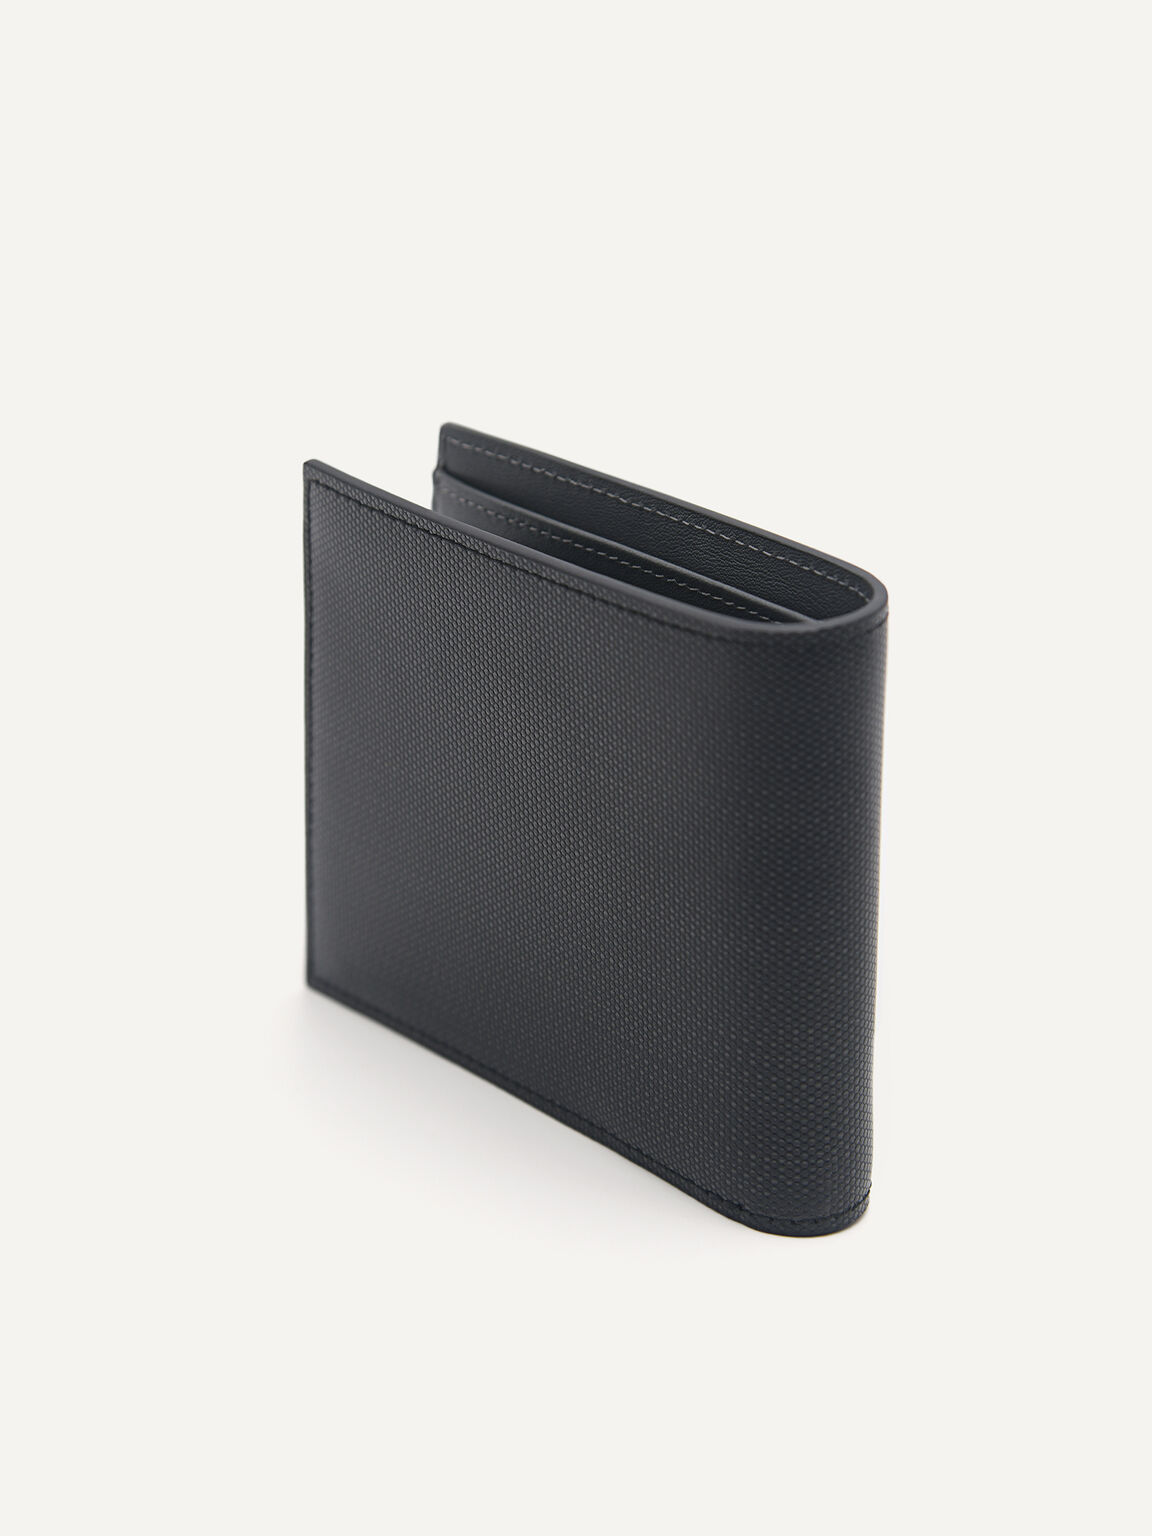 Black Leather Wallet - PEDRO SG